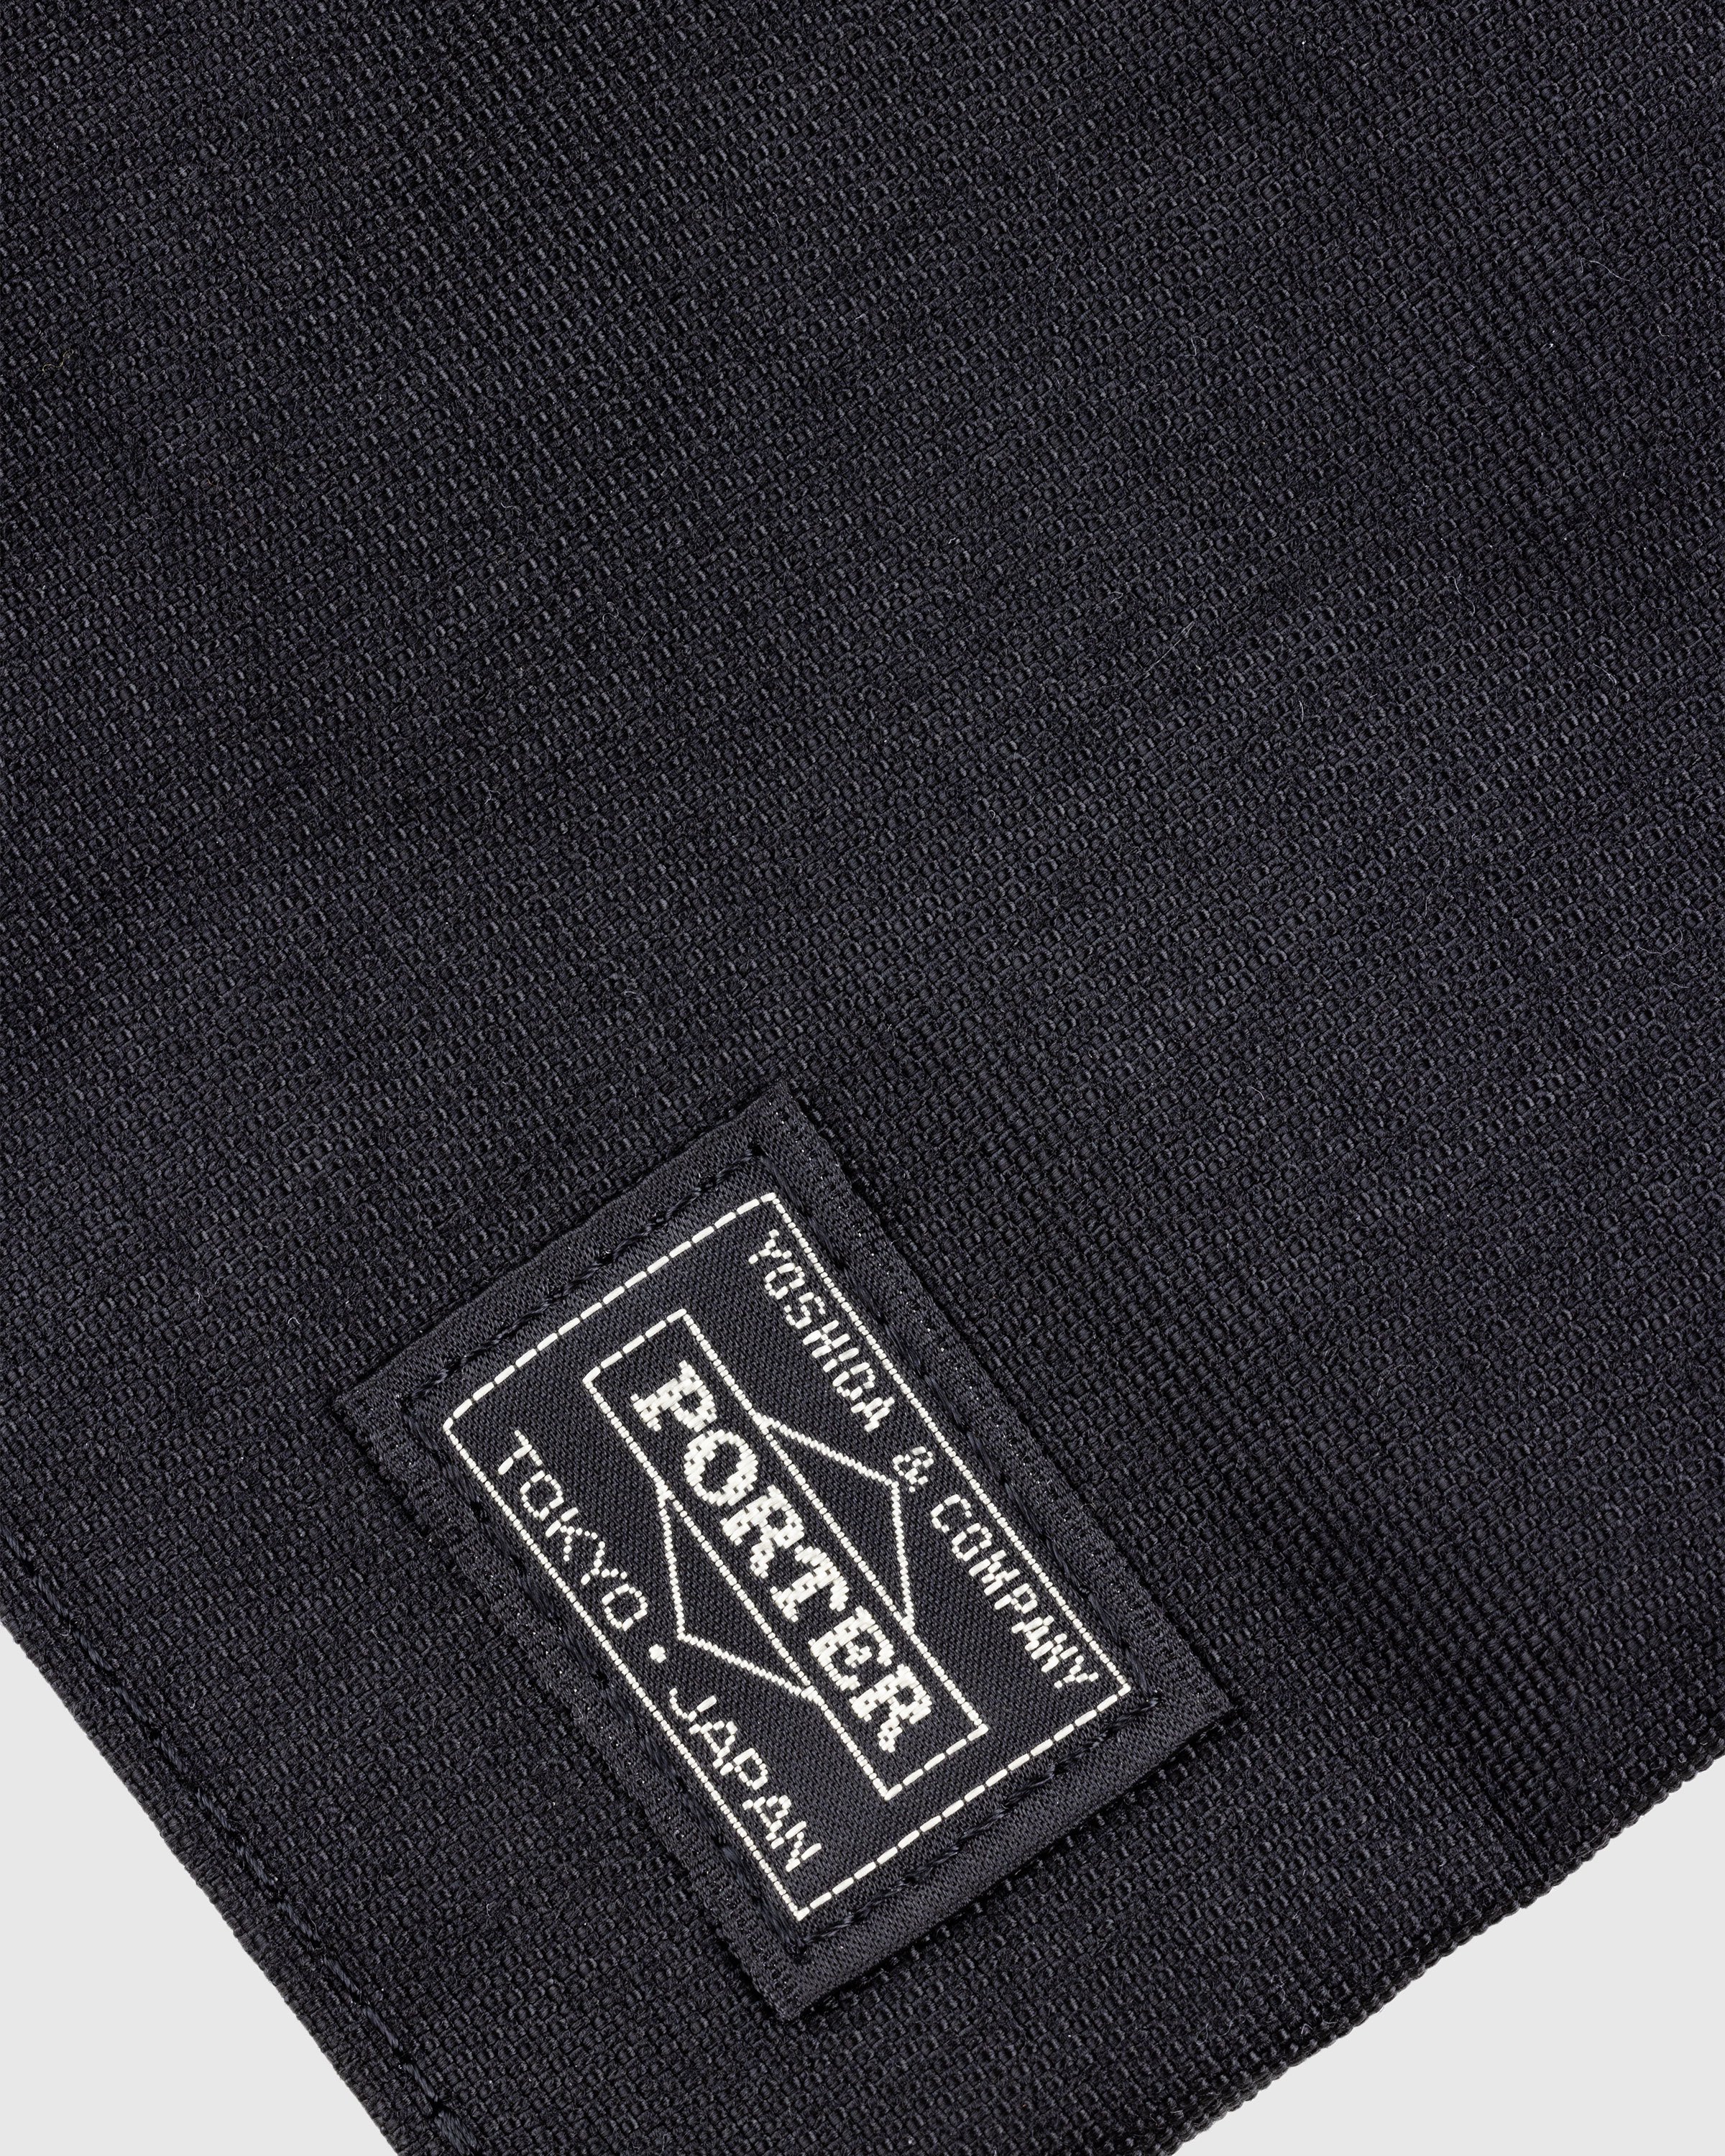 Porter-Yoshida & Co. - Sacoche Hybrid Shoulder Bag Black - Accessories - Black - Image 4